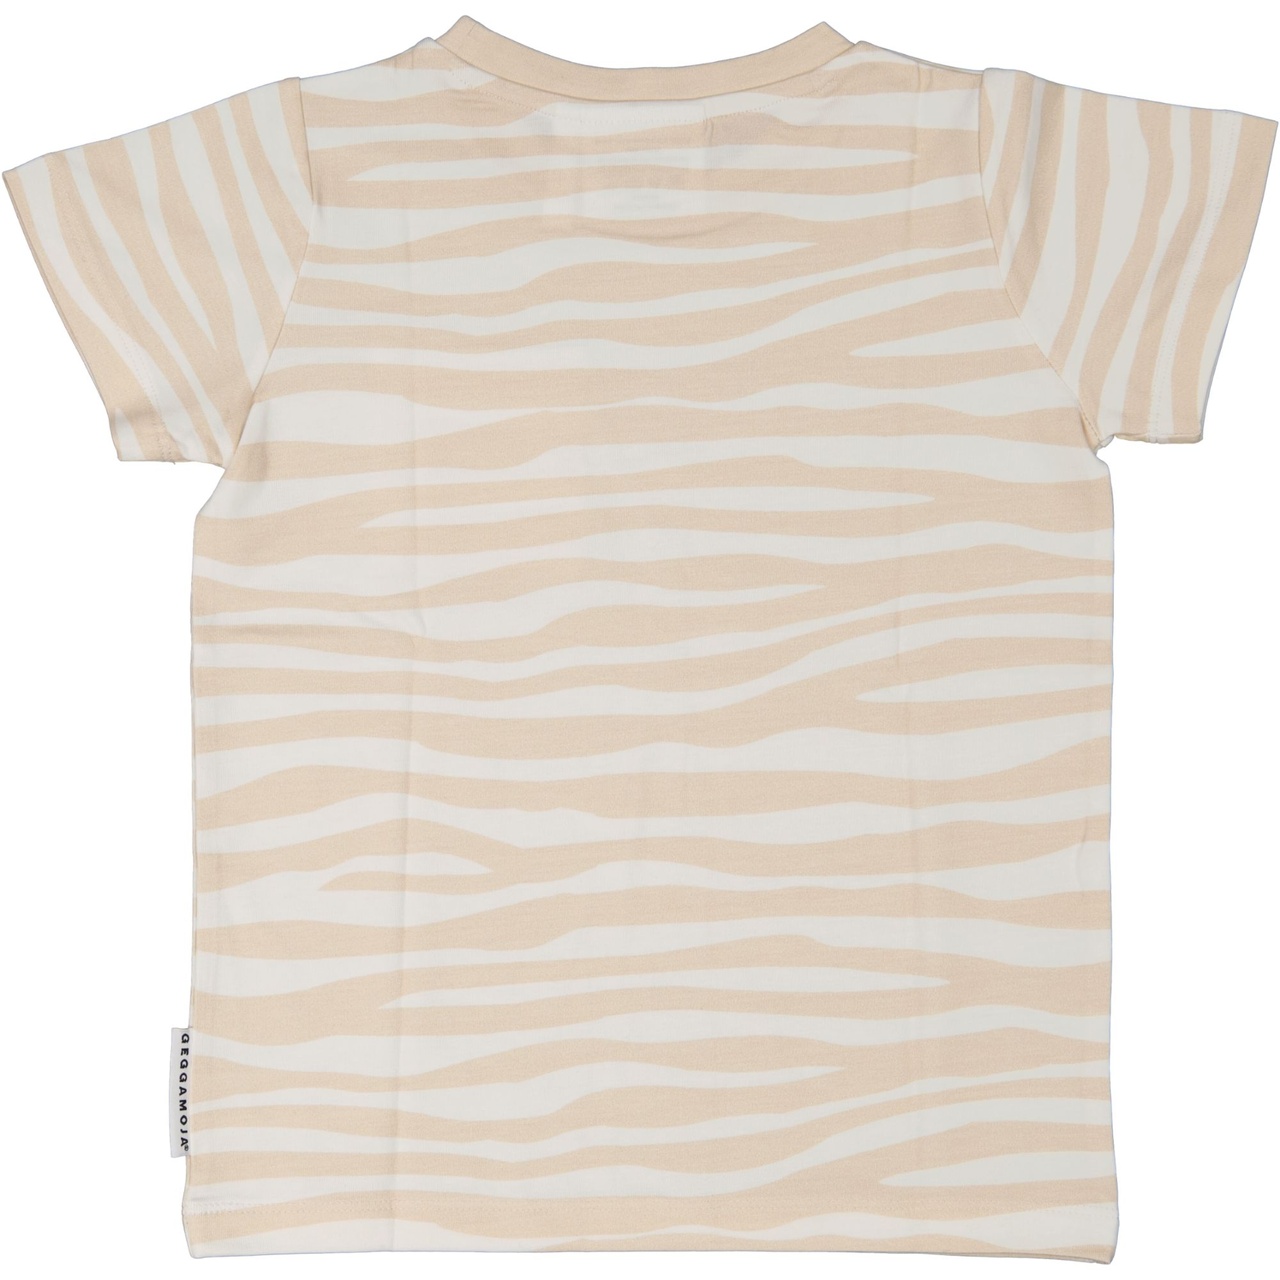 Bamboo T-paita Soft beige zebra